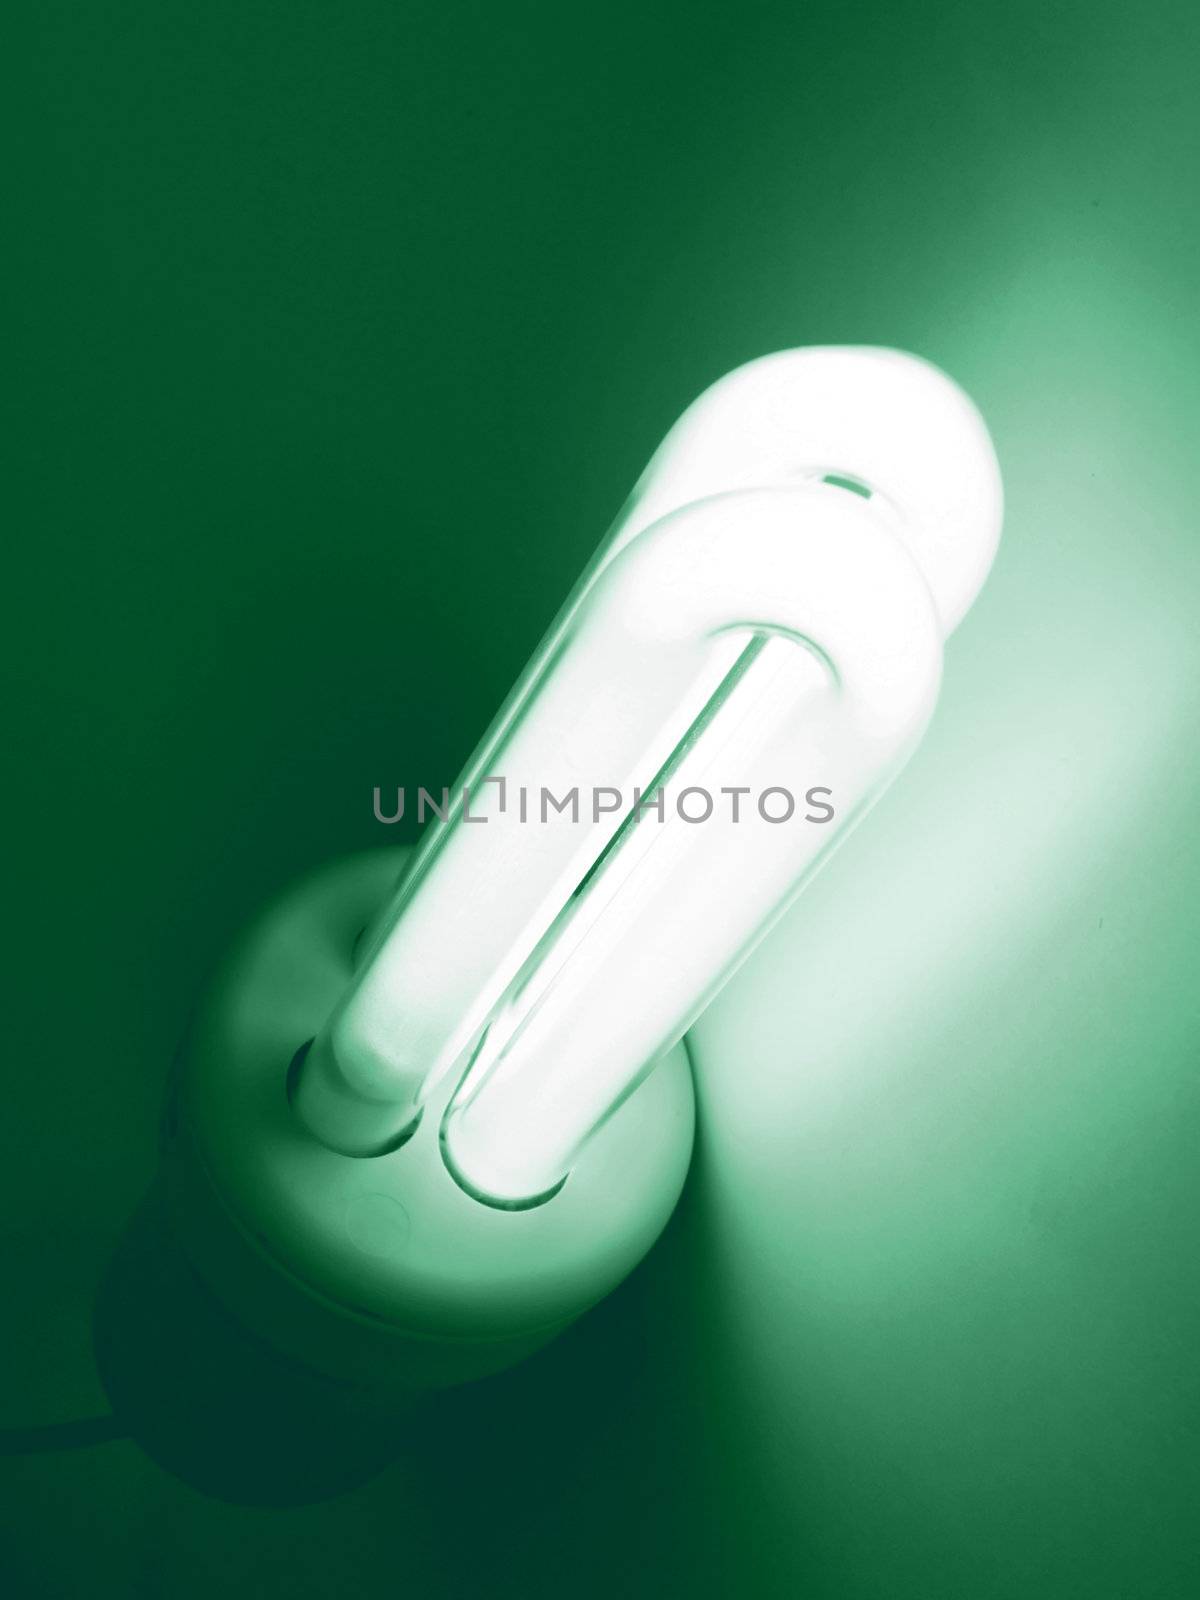 Compact fluorescent light bulb ecological low carbon